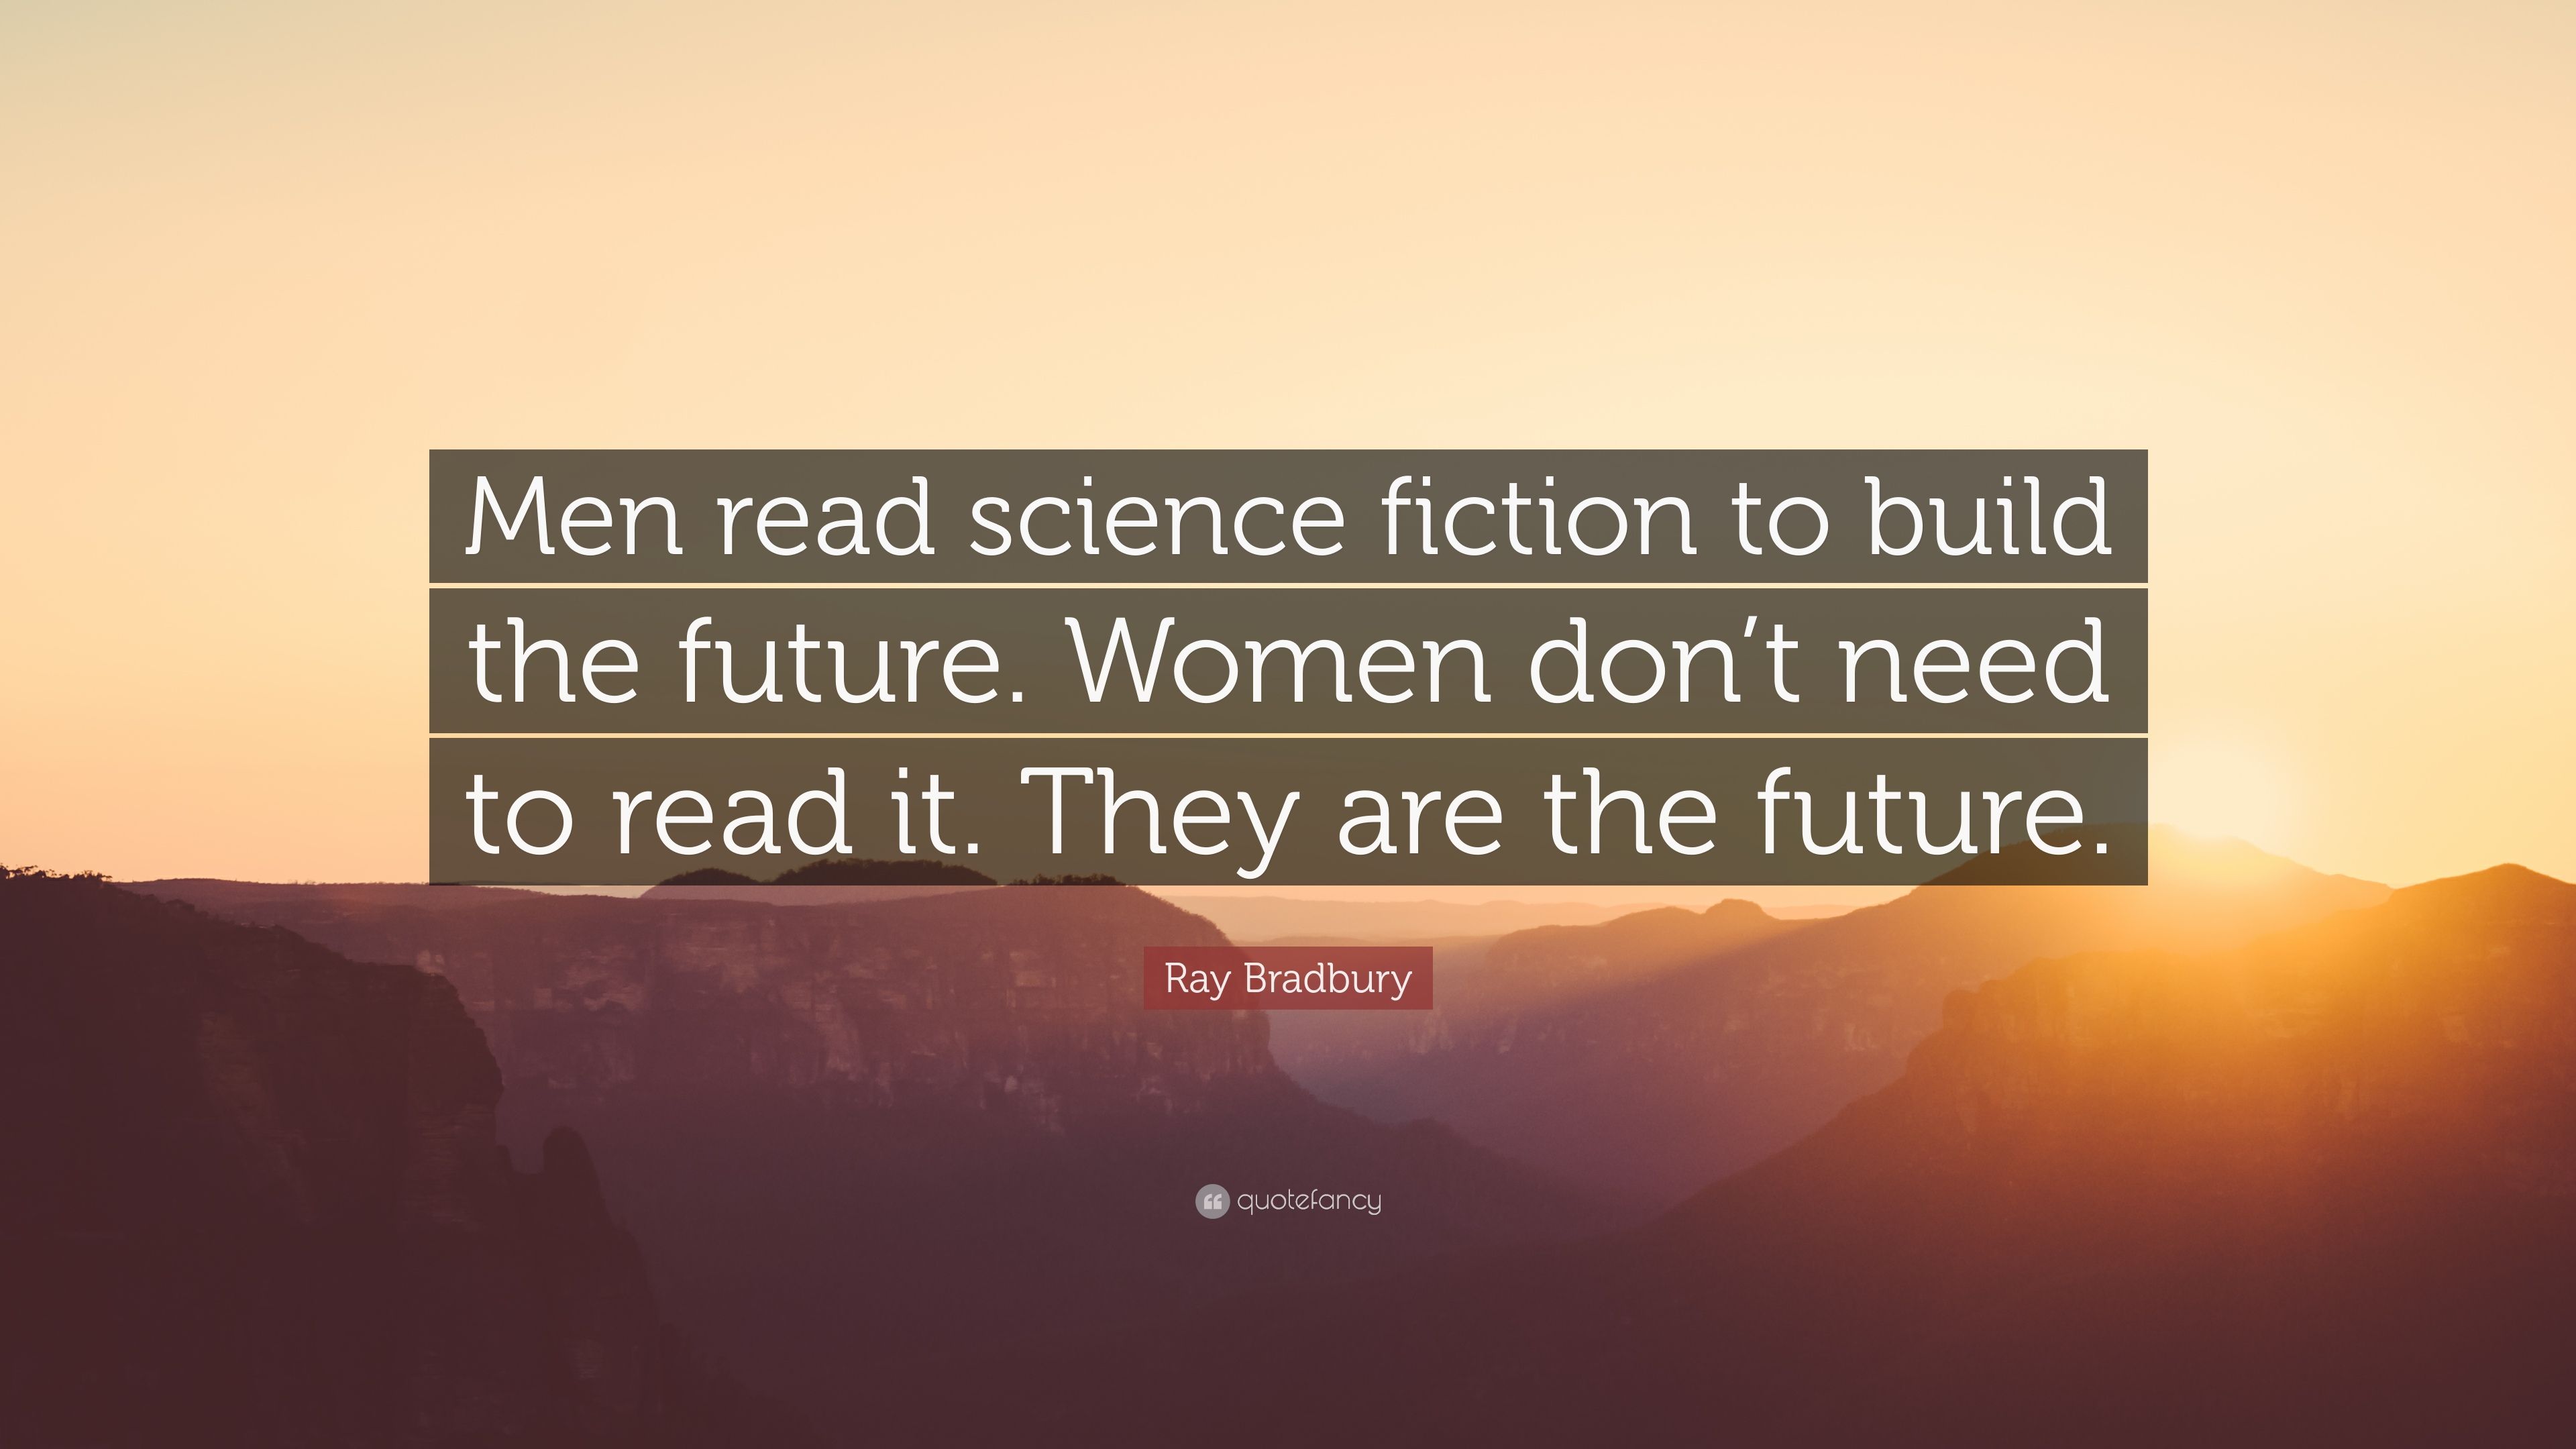 Ray Bradbury Quote: “Men read science fiction to build the future